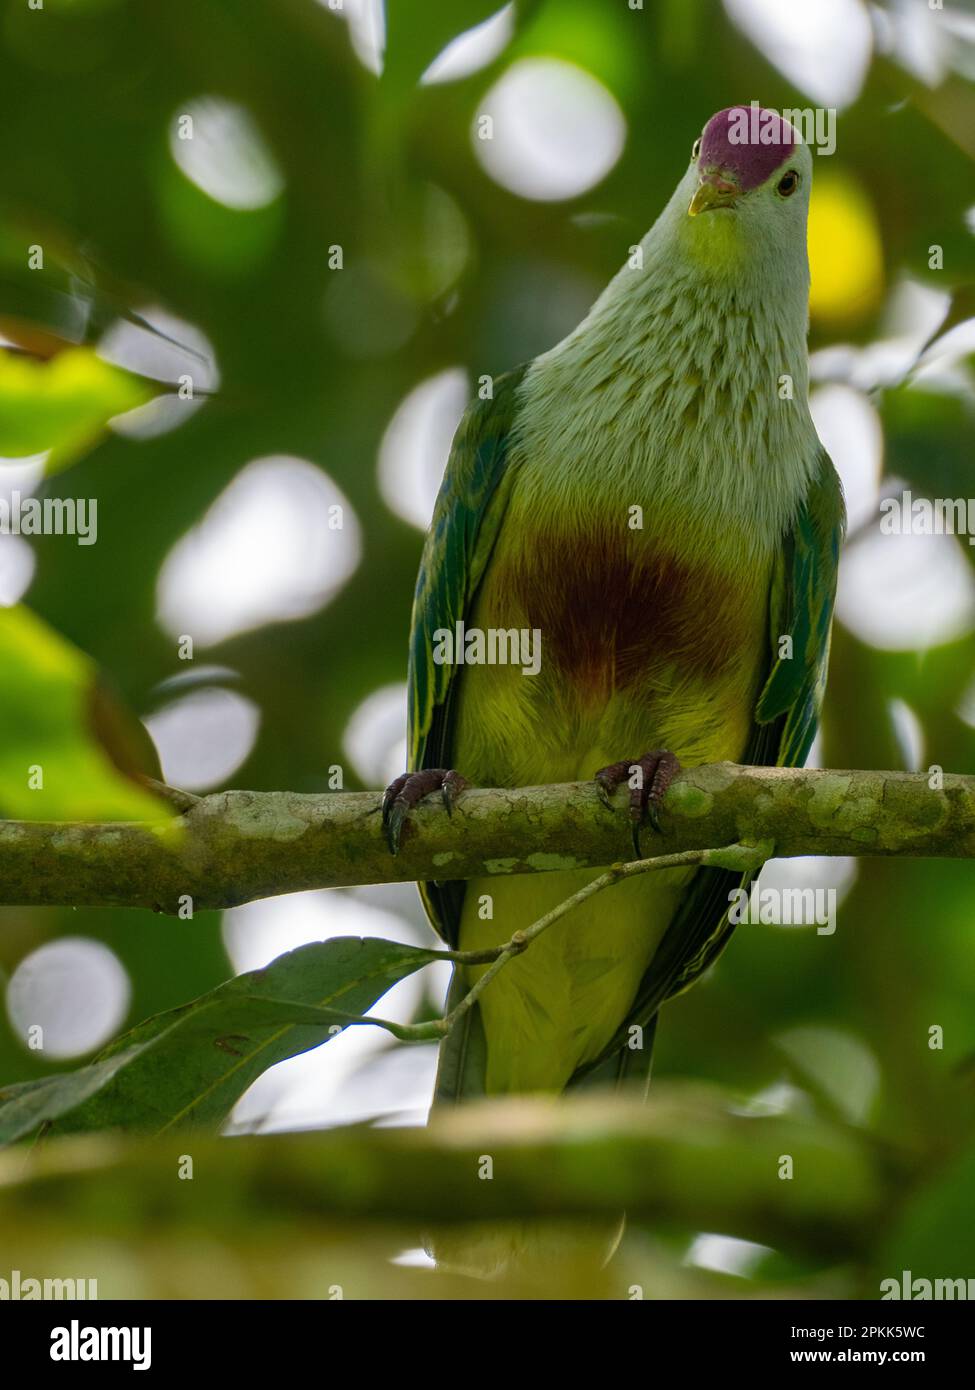 Cook islands Fruit-dove, Ptilinopus rarotongensis, a beautiful endemic bird found on the island of Rarotonga Stock Photo